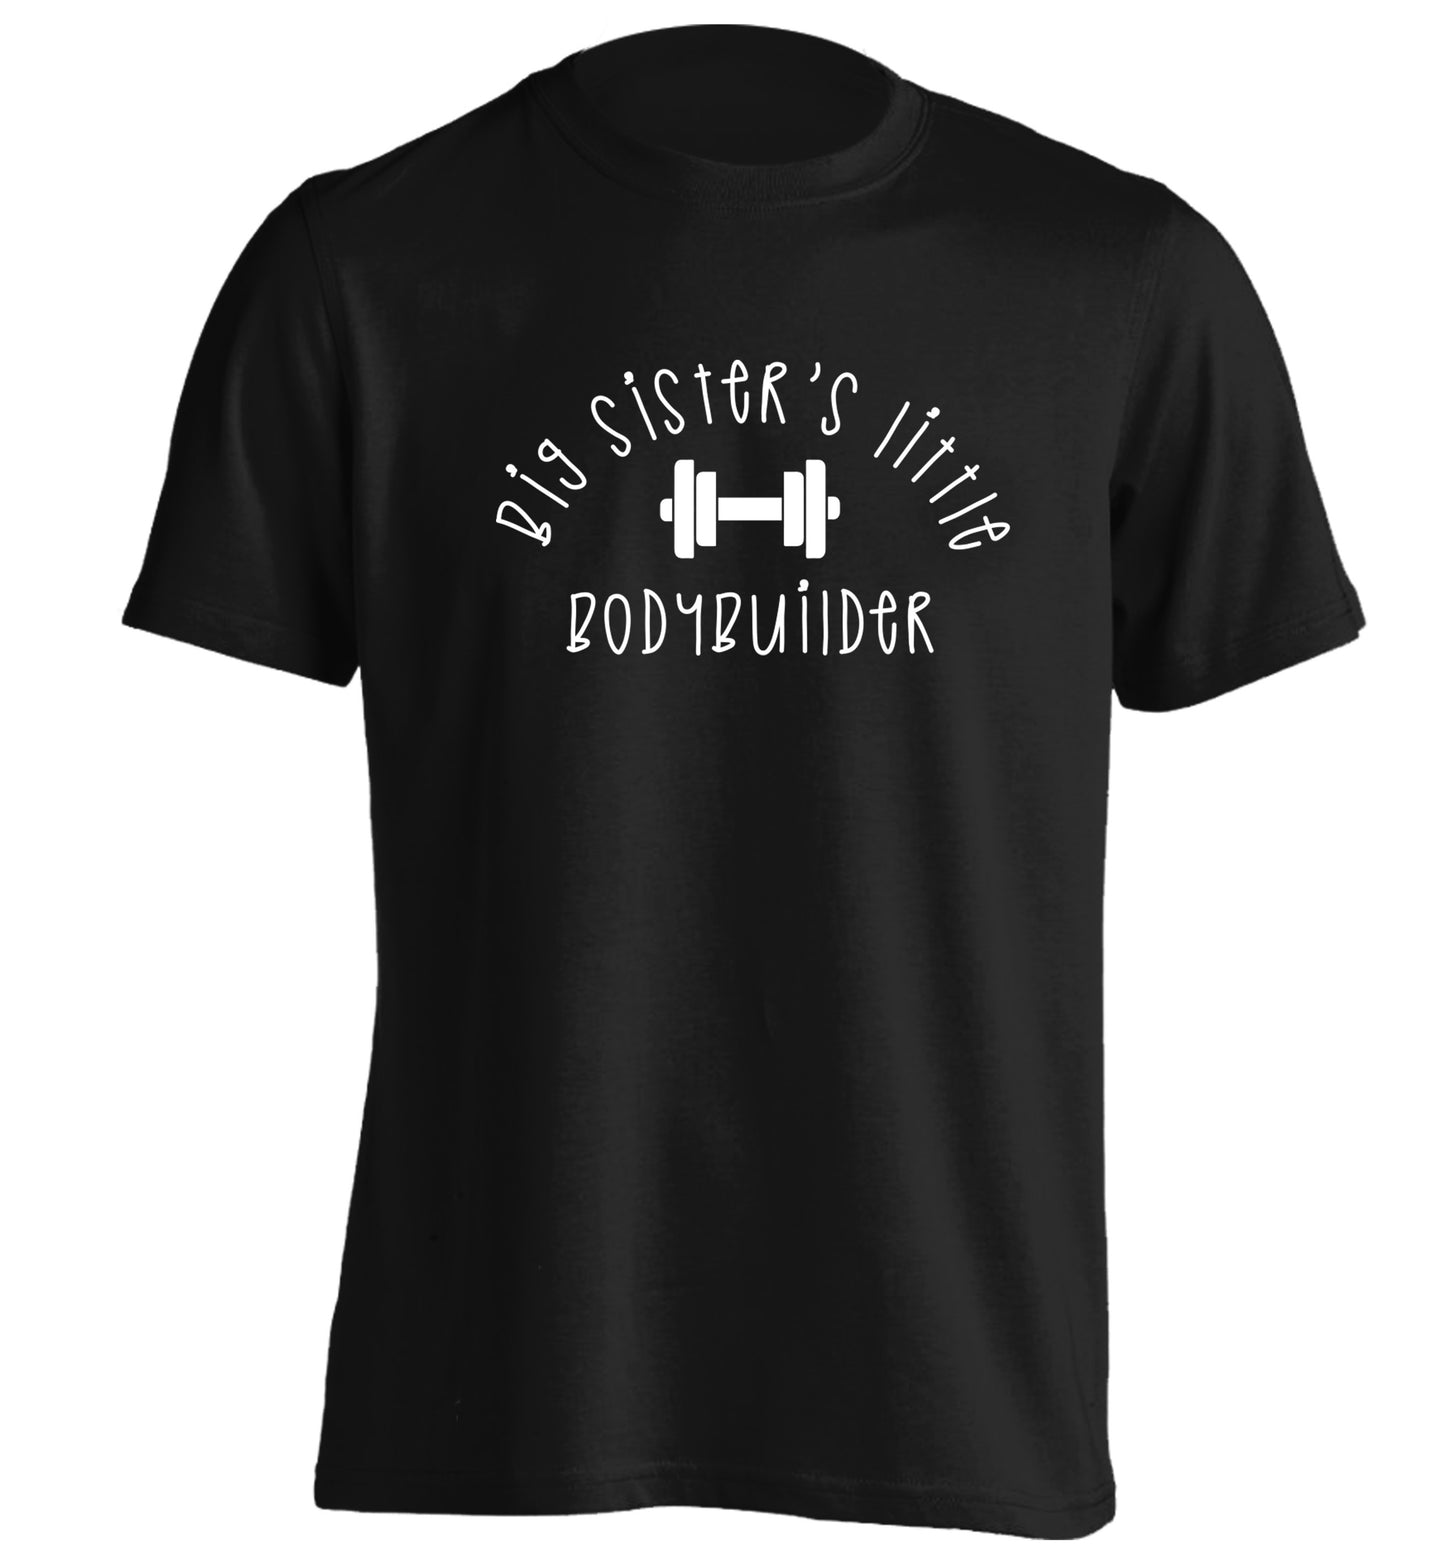 Big sister's little bodybuilder adults unisex black Tshirt 2XL